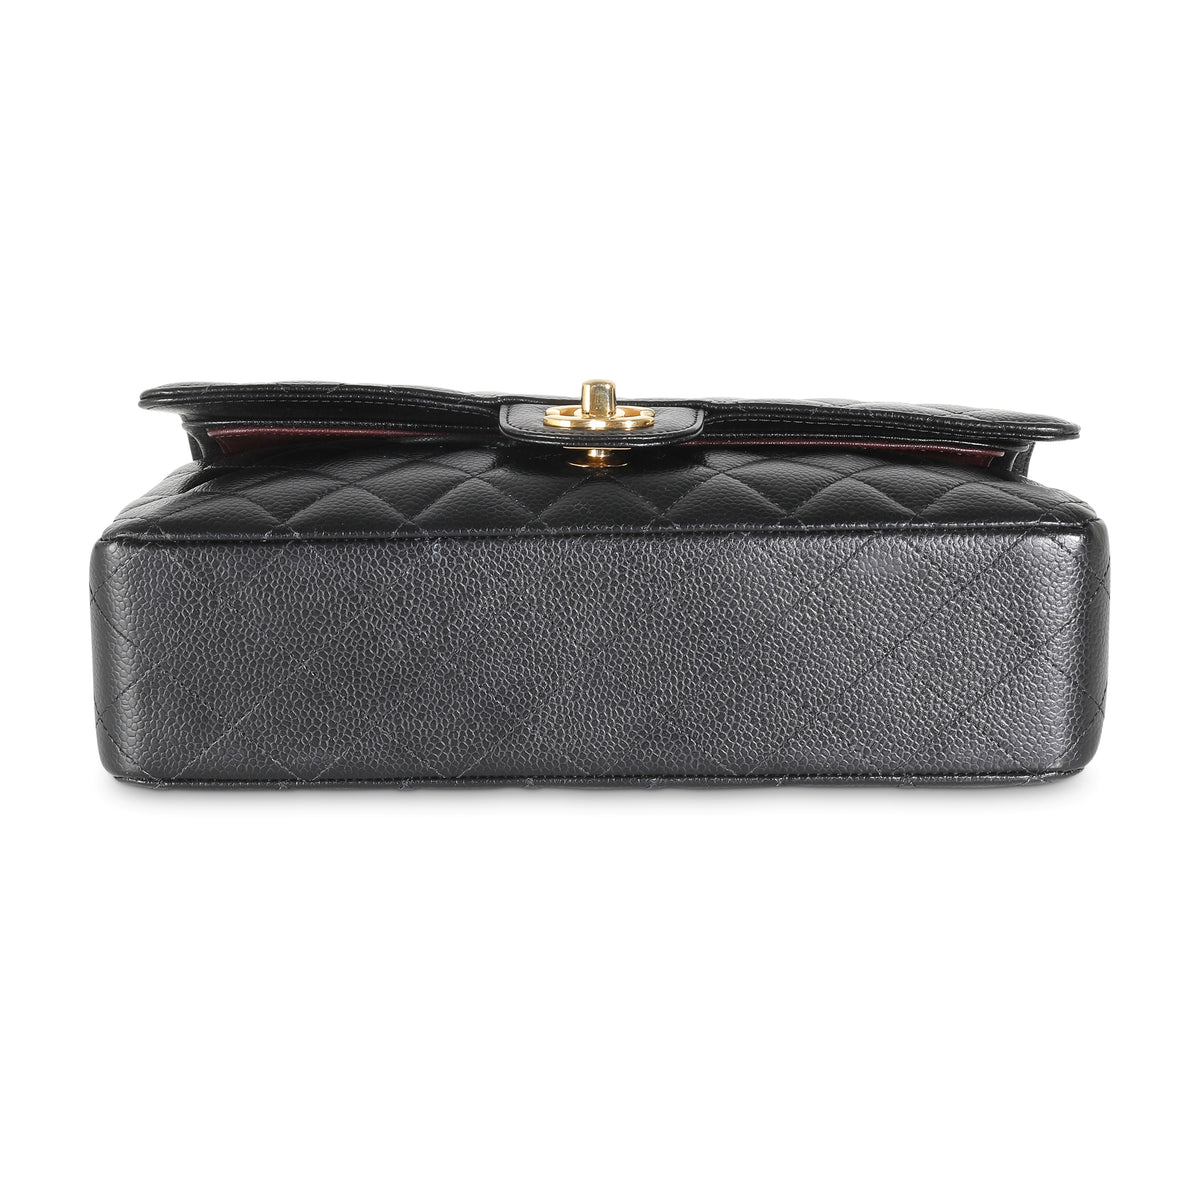 Black Quilted Caviar Medium Classic Double Flap Bag